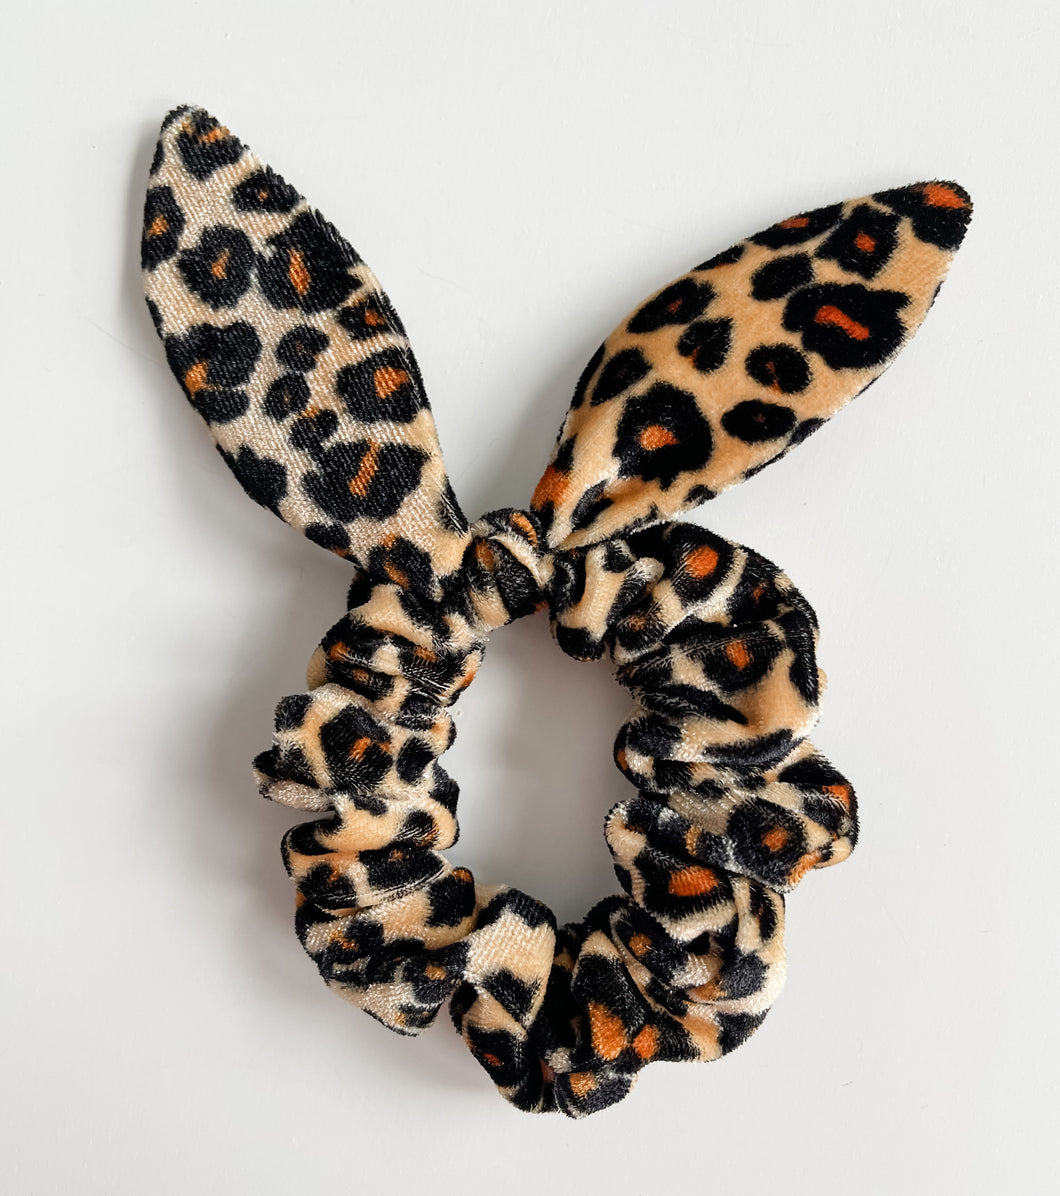 Leopard Bows & Headbands